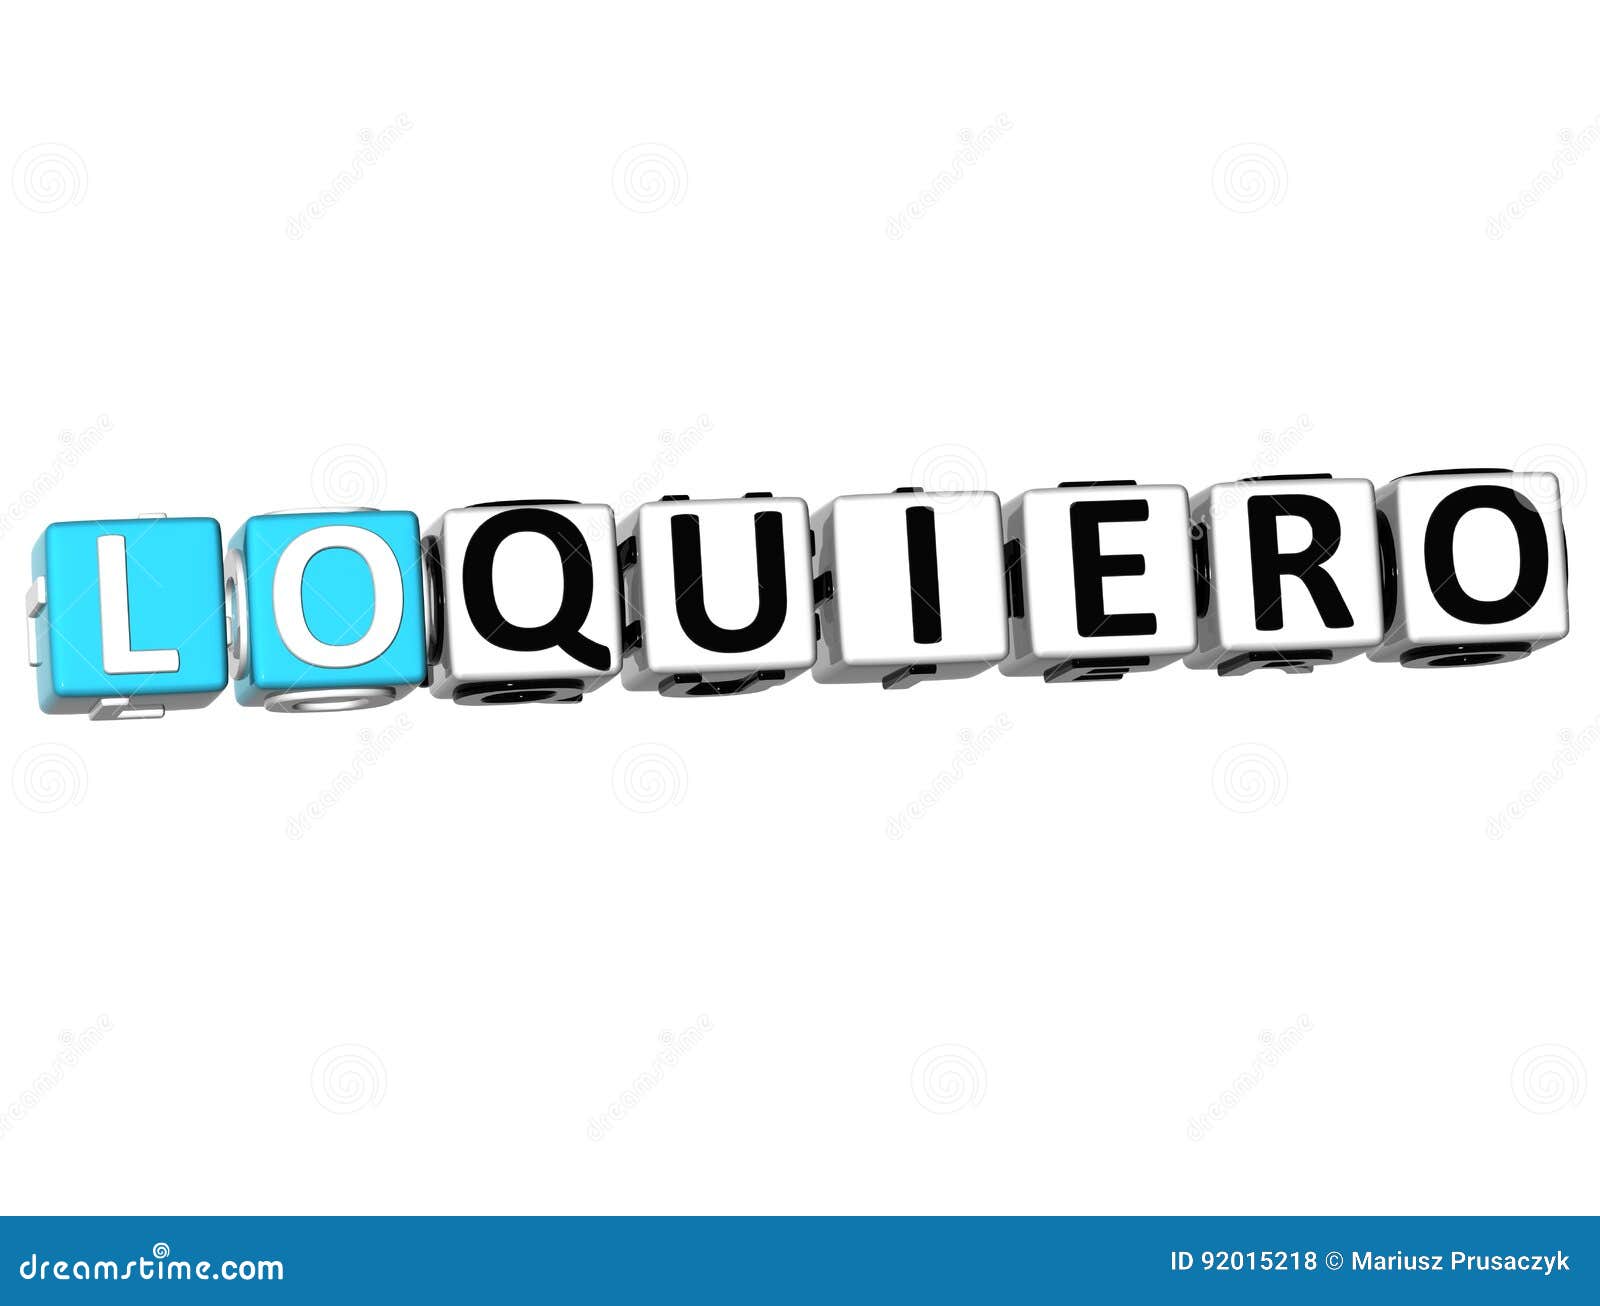 3d lo quiero block text on white background